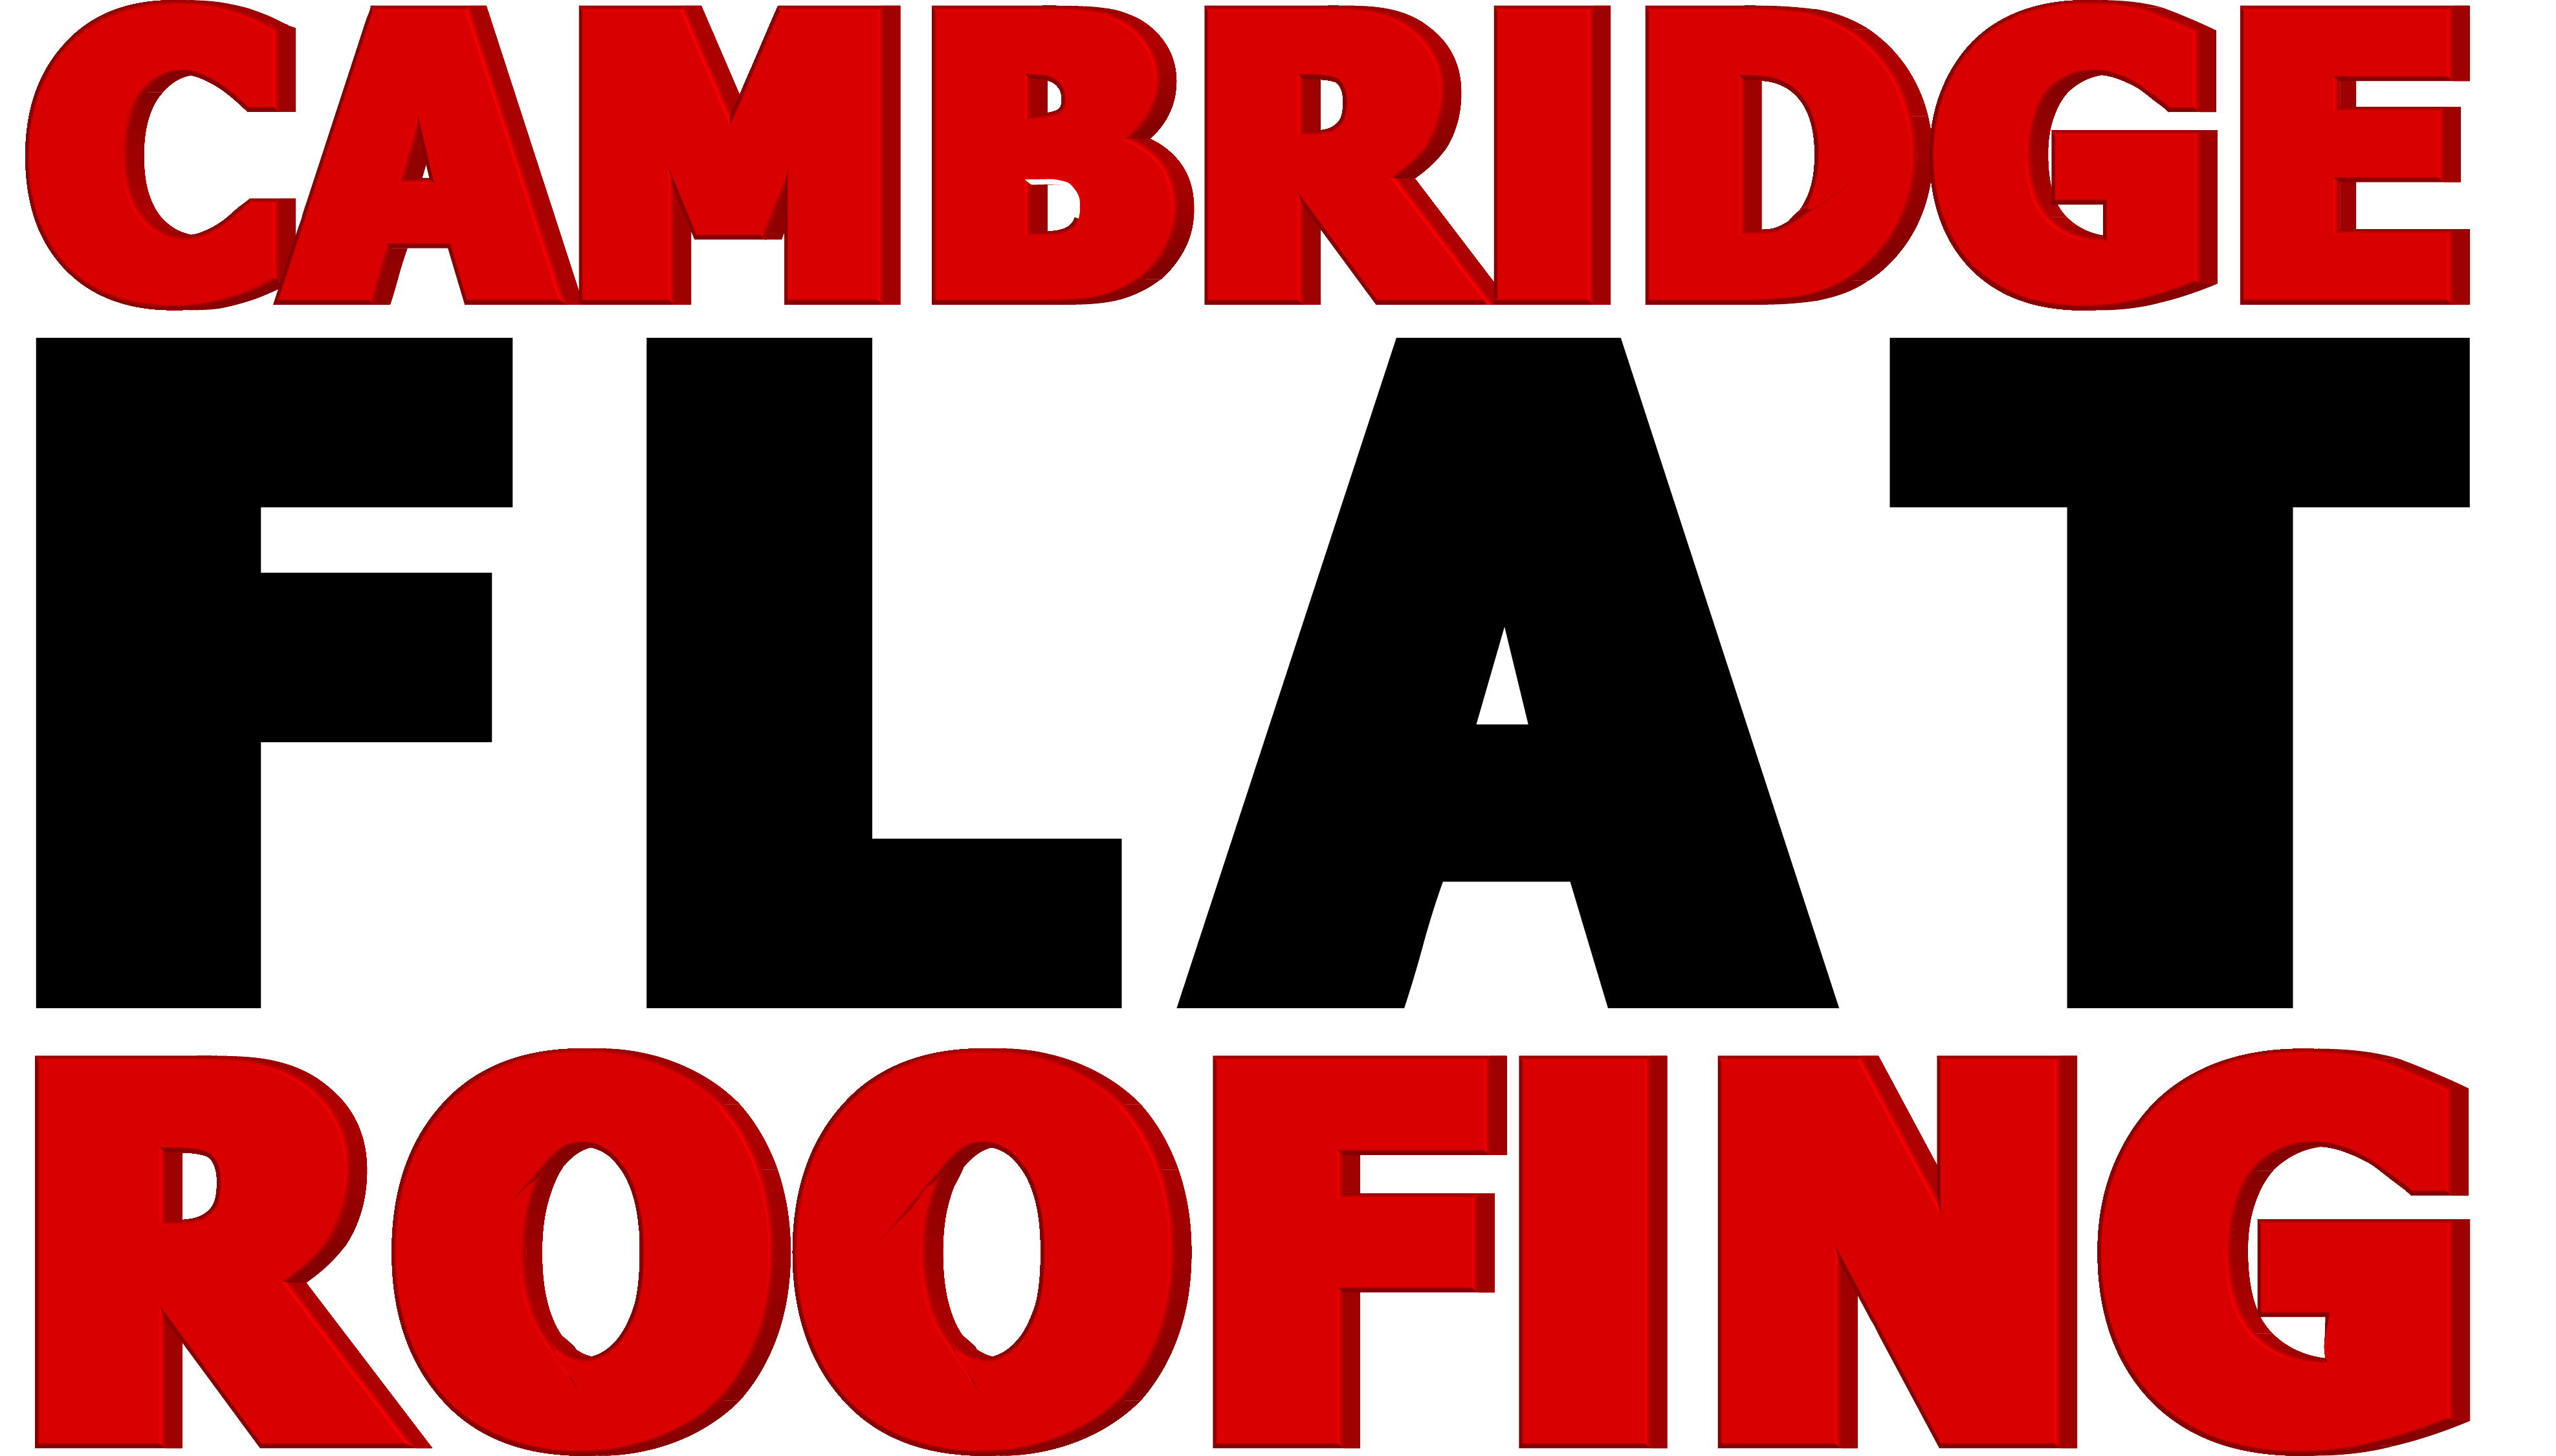 Cambridge Flat Roofing Logo